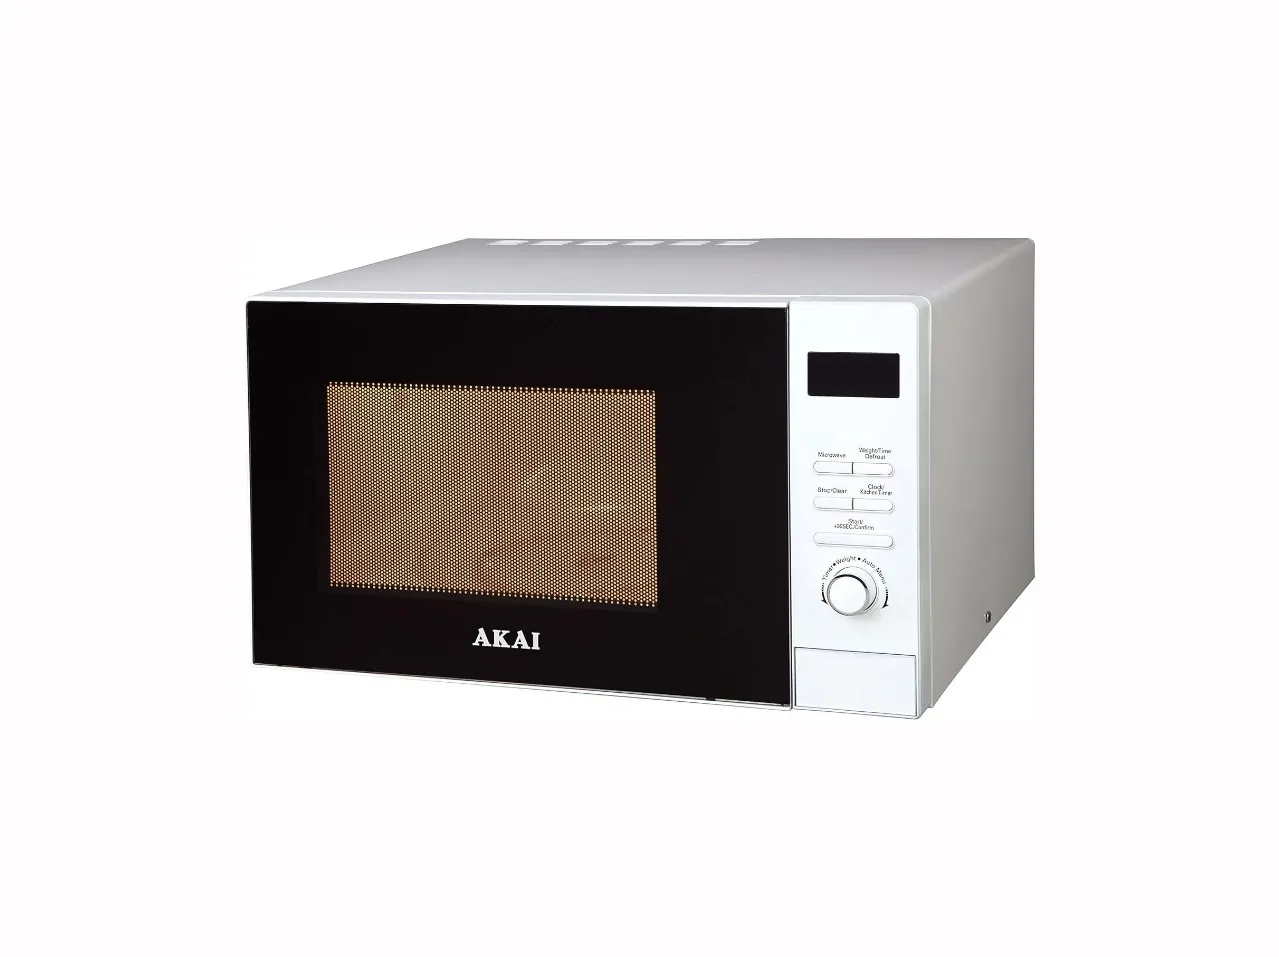 Akai 23 Liter Microwave Oven Digital Control 800W Color White Model | MWMA-M25MW | Year Warranty.